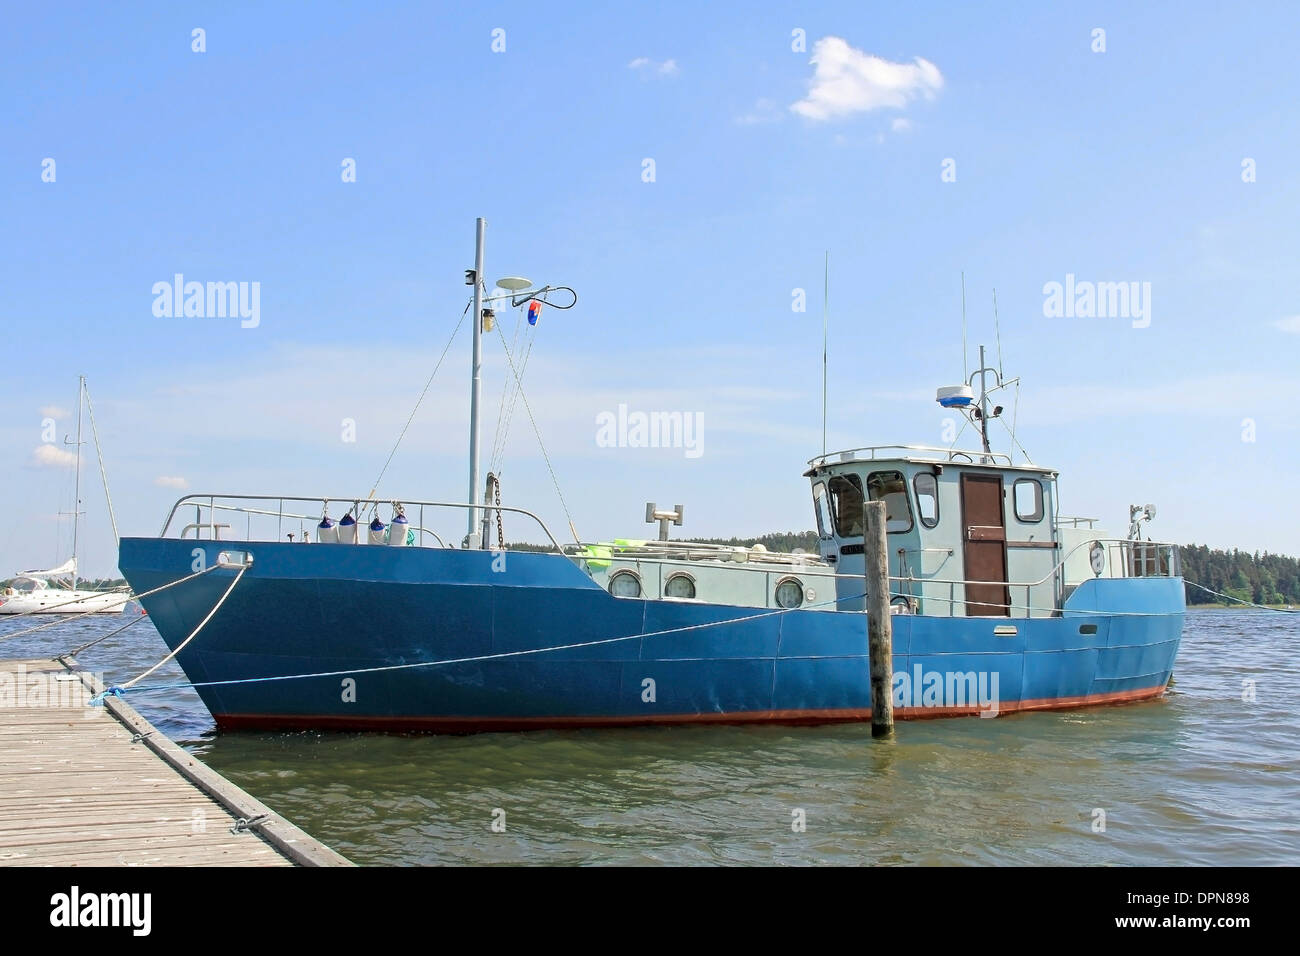 Blue fishing boat or fishing trawler in a marina at summer. Stock Photo